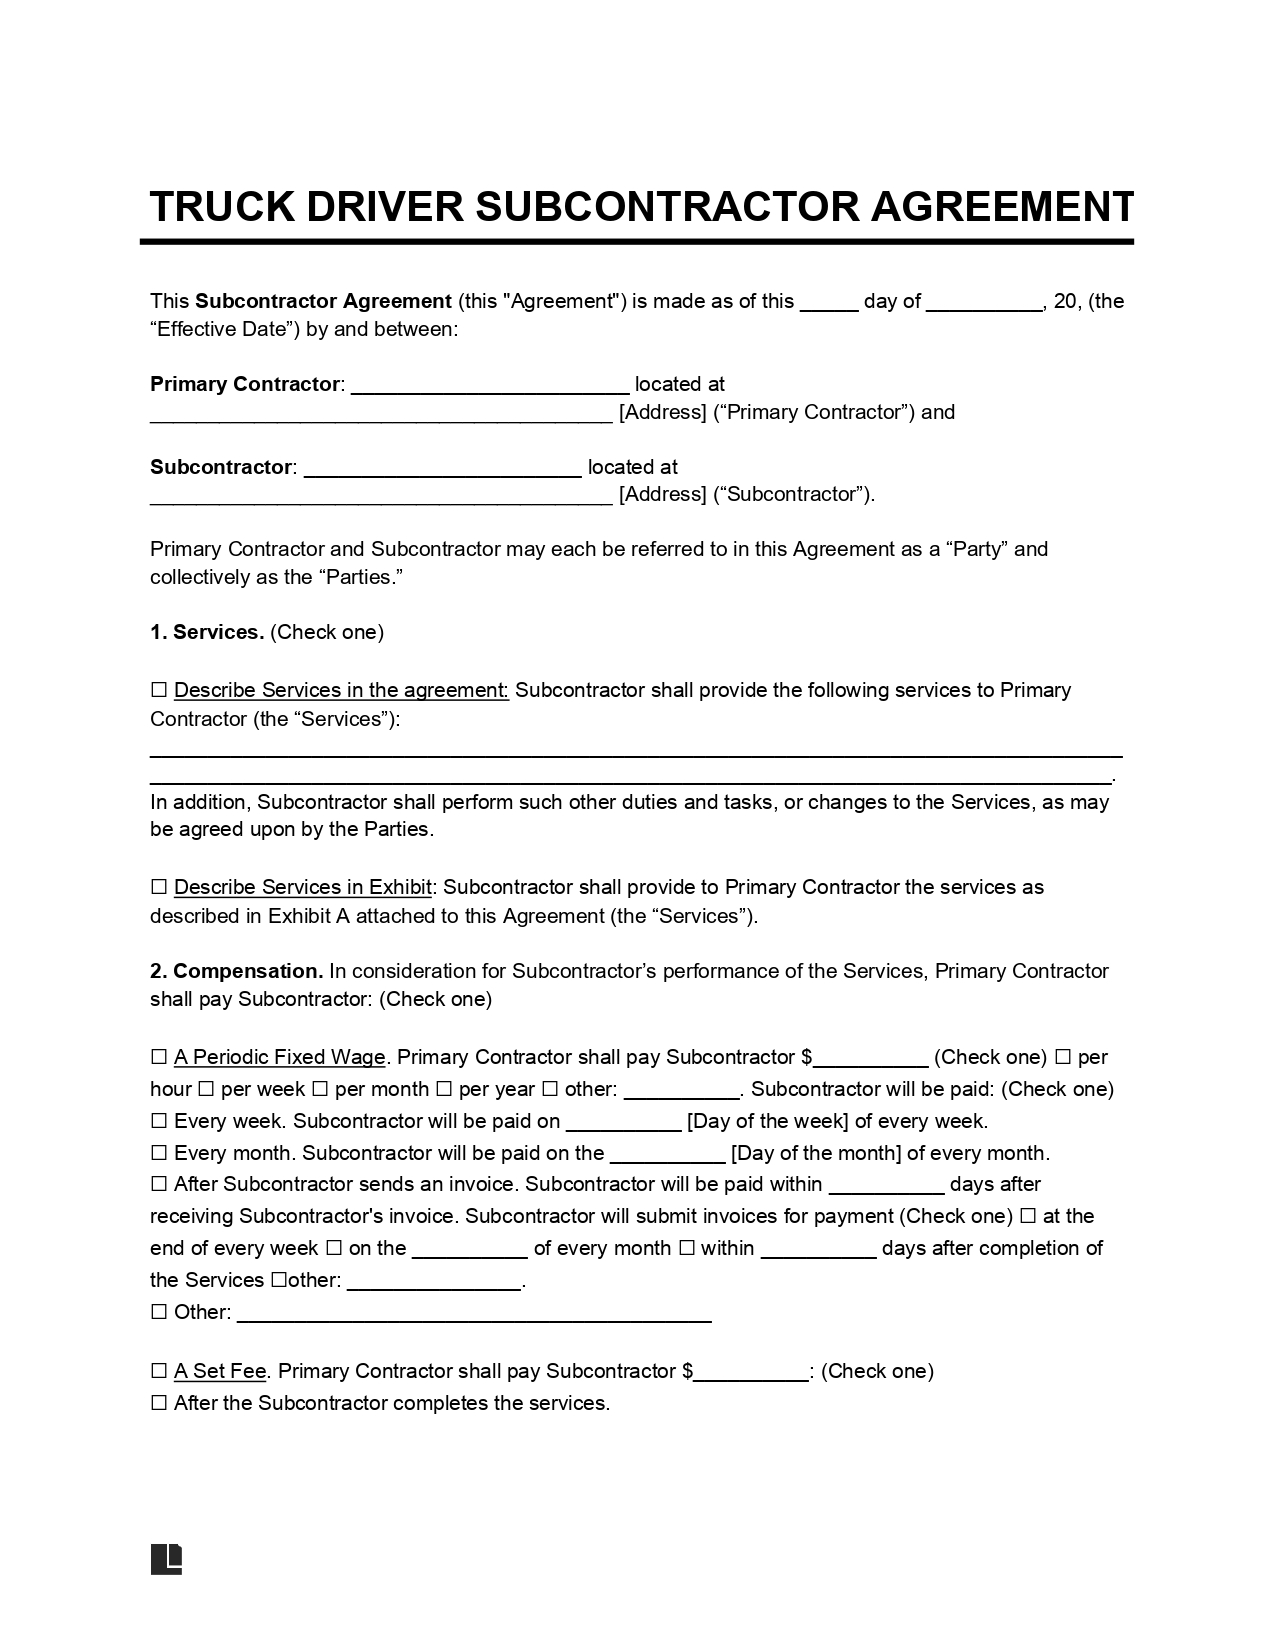 Truck Driver Subcontractor Agreement